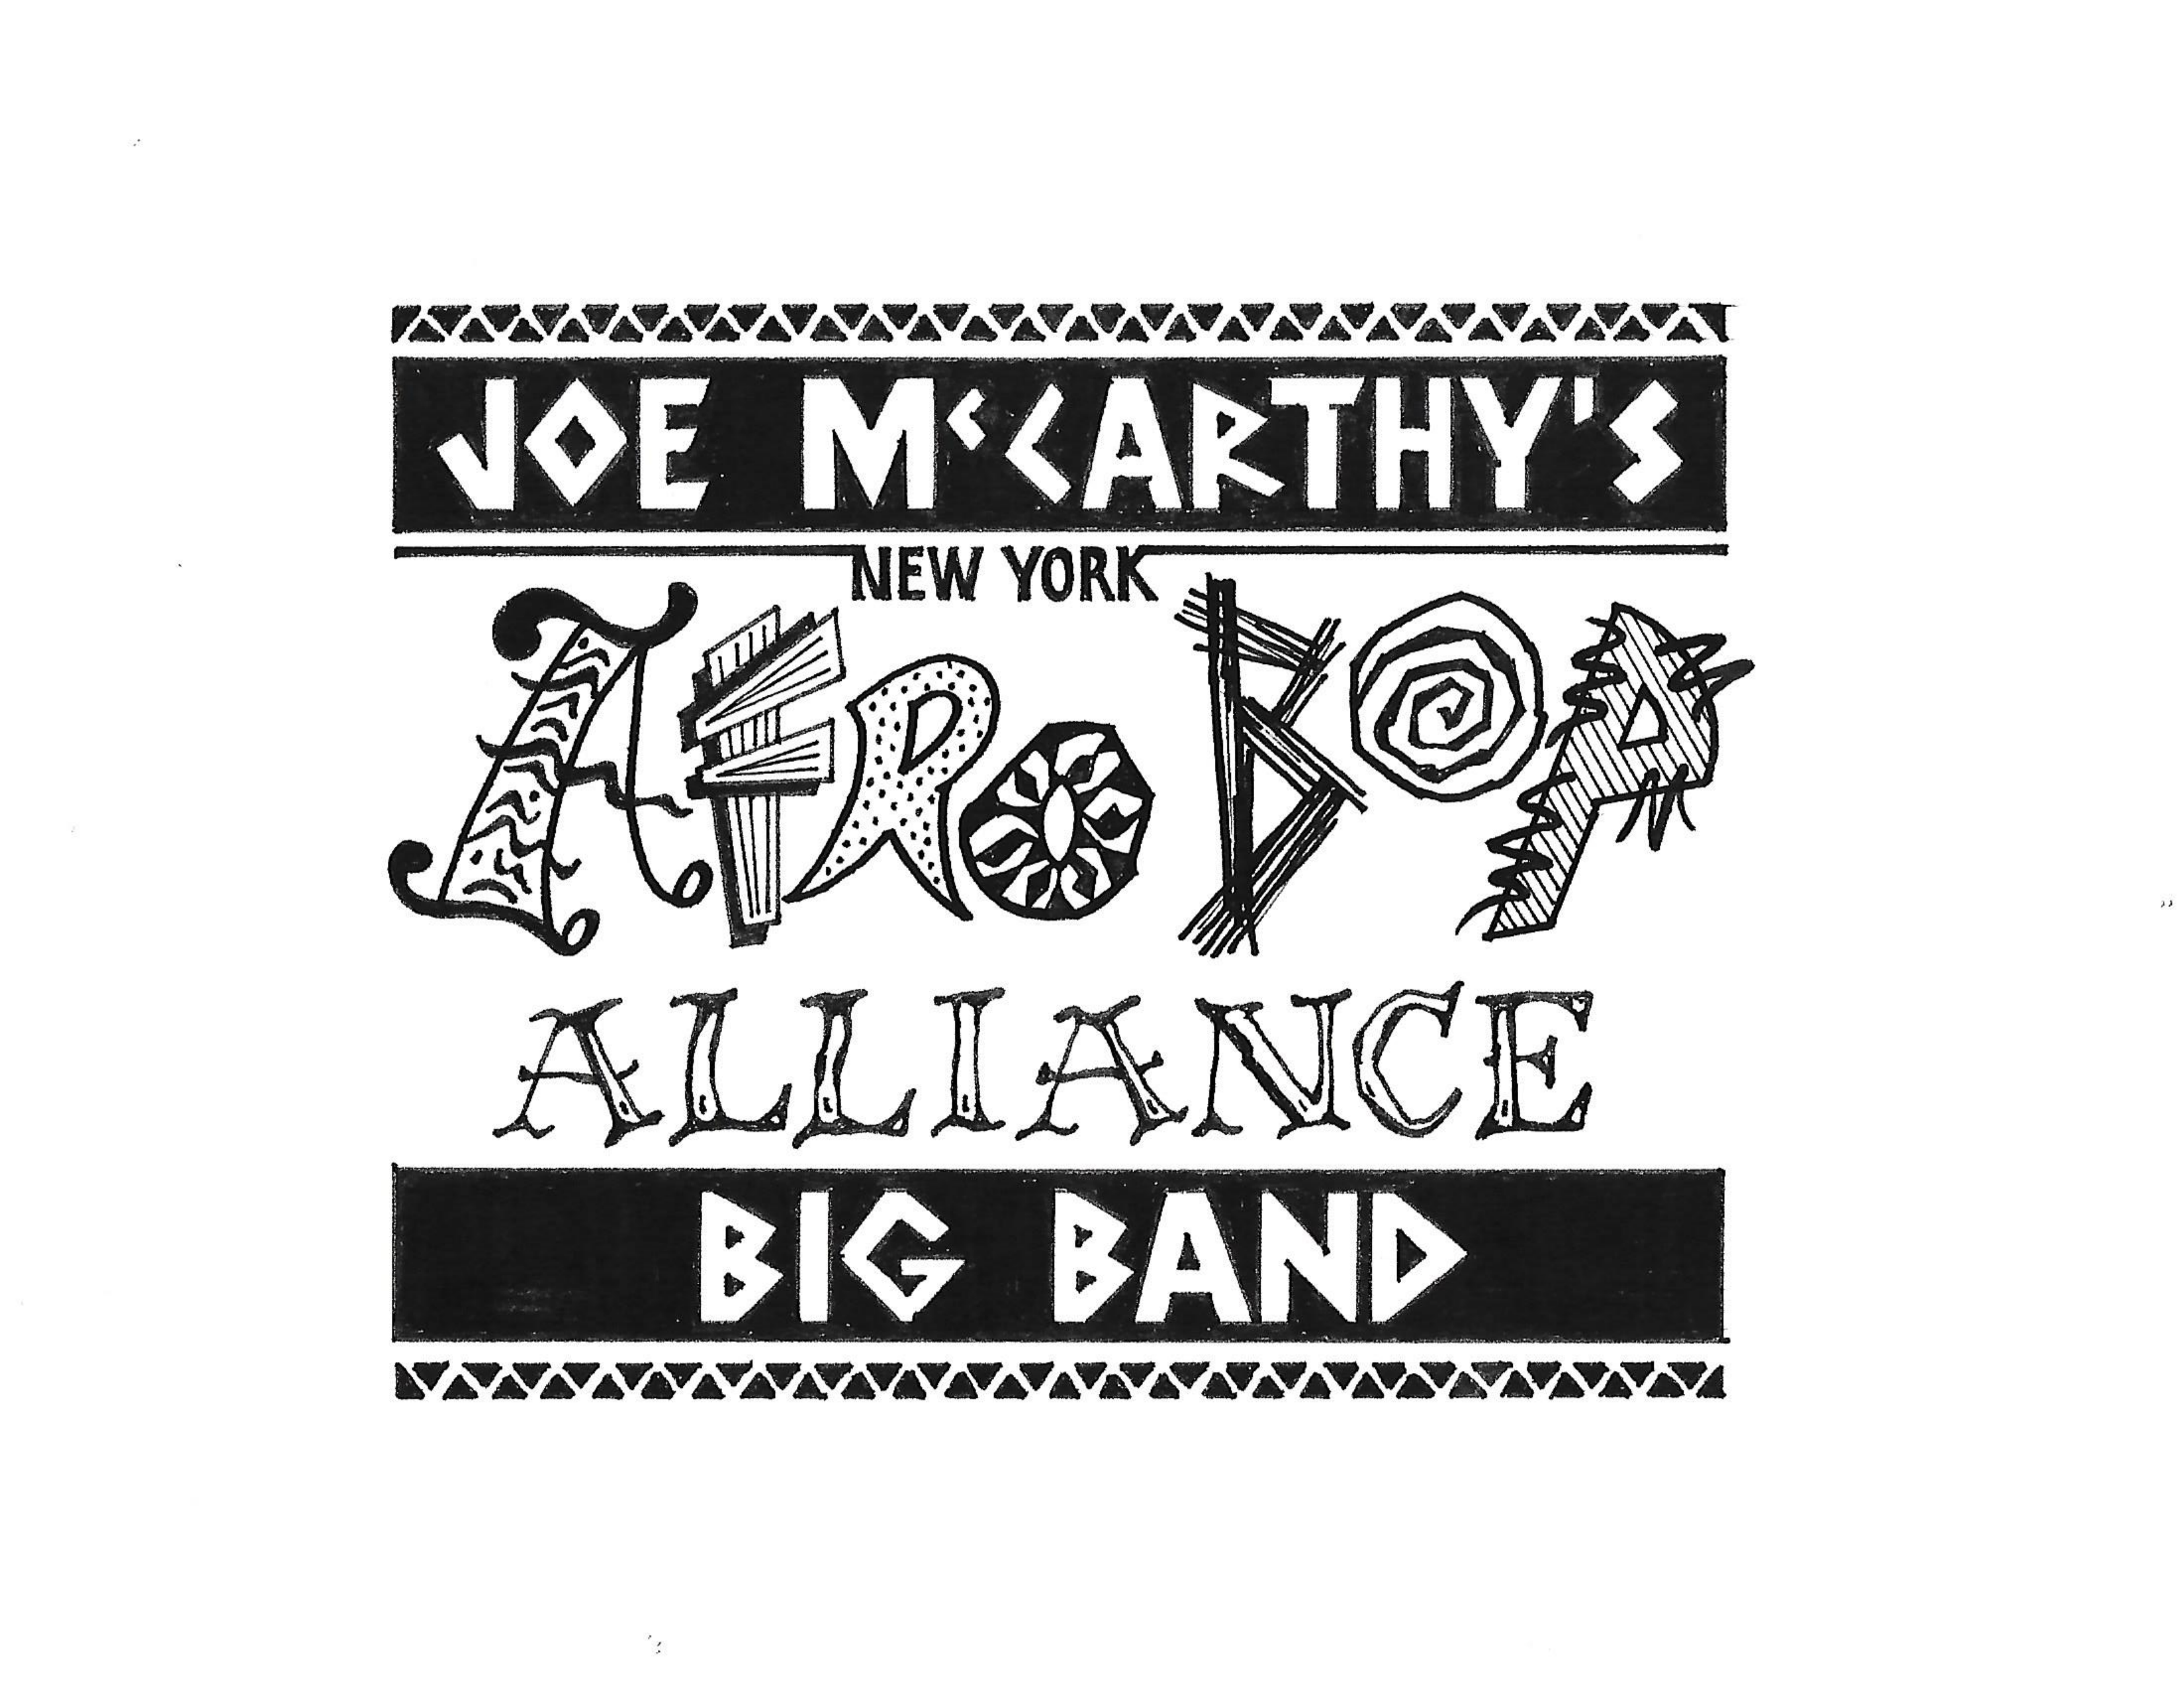 Joe McCarthy and The New York Afro Bop Alliance Big Band